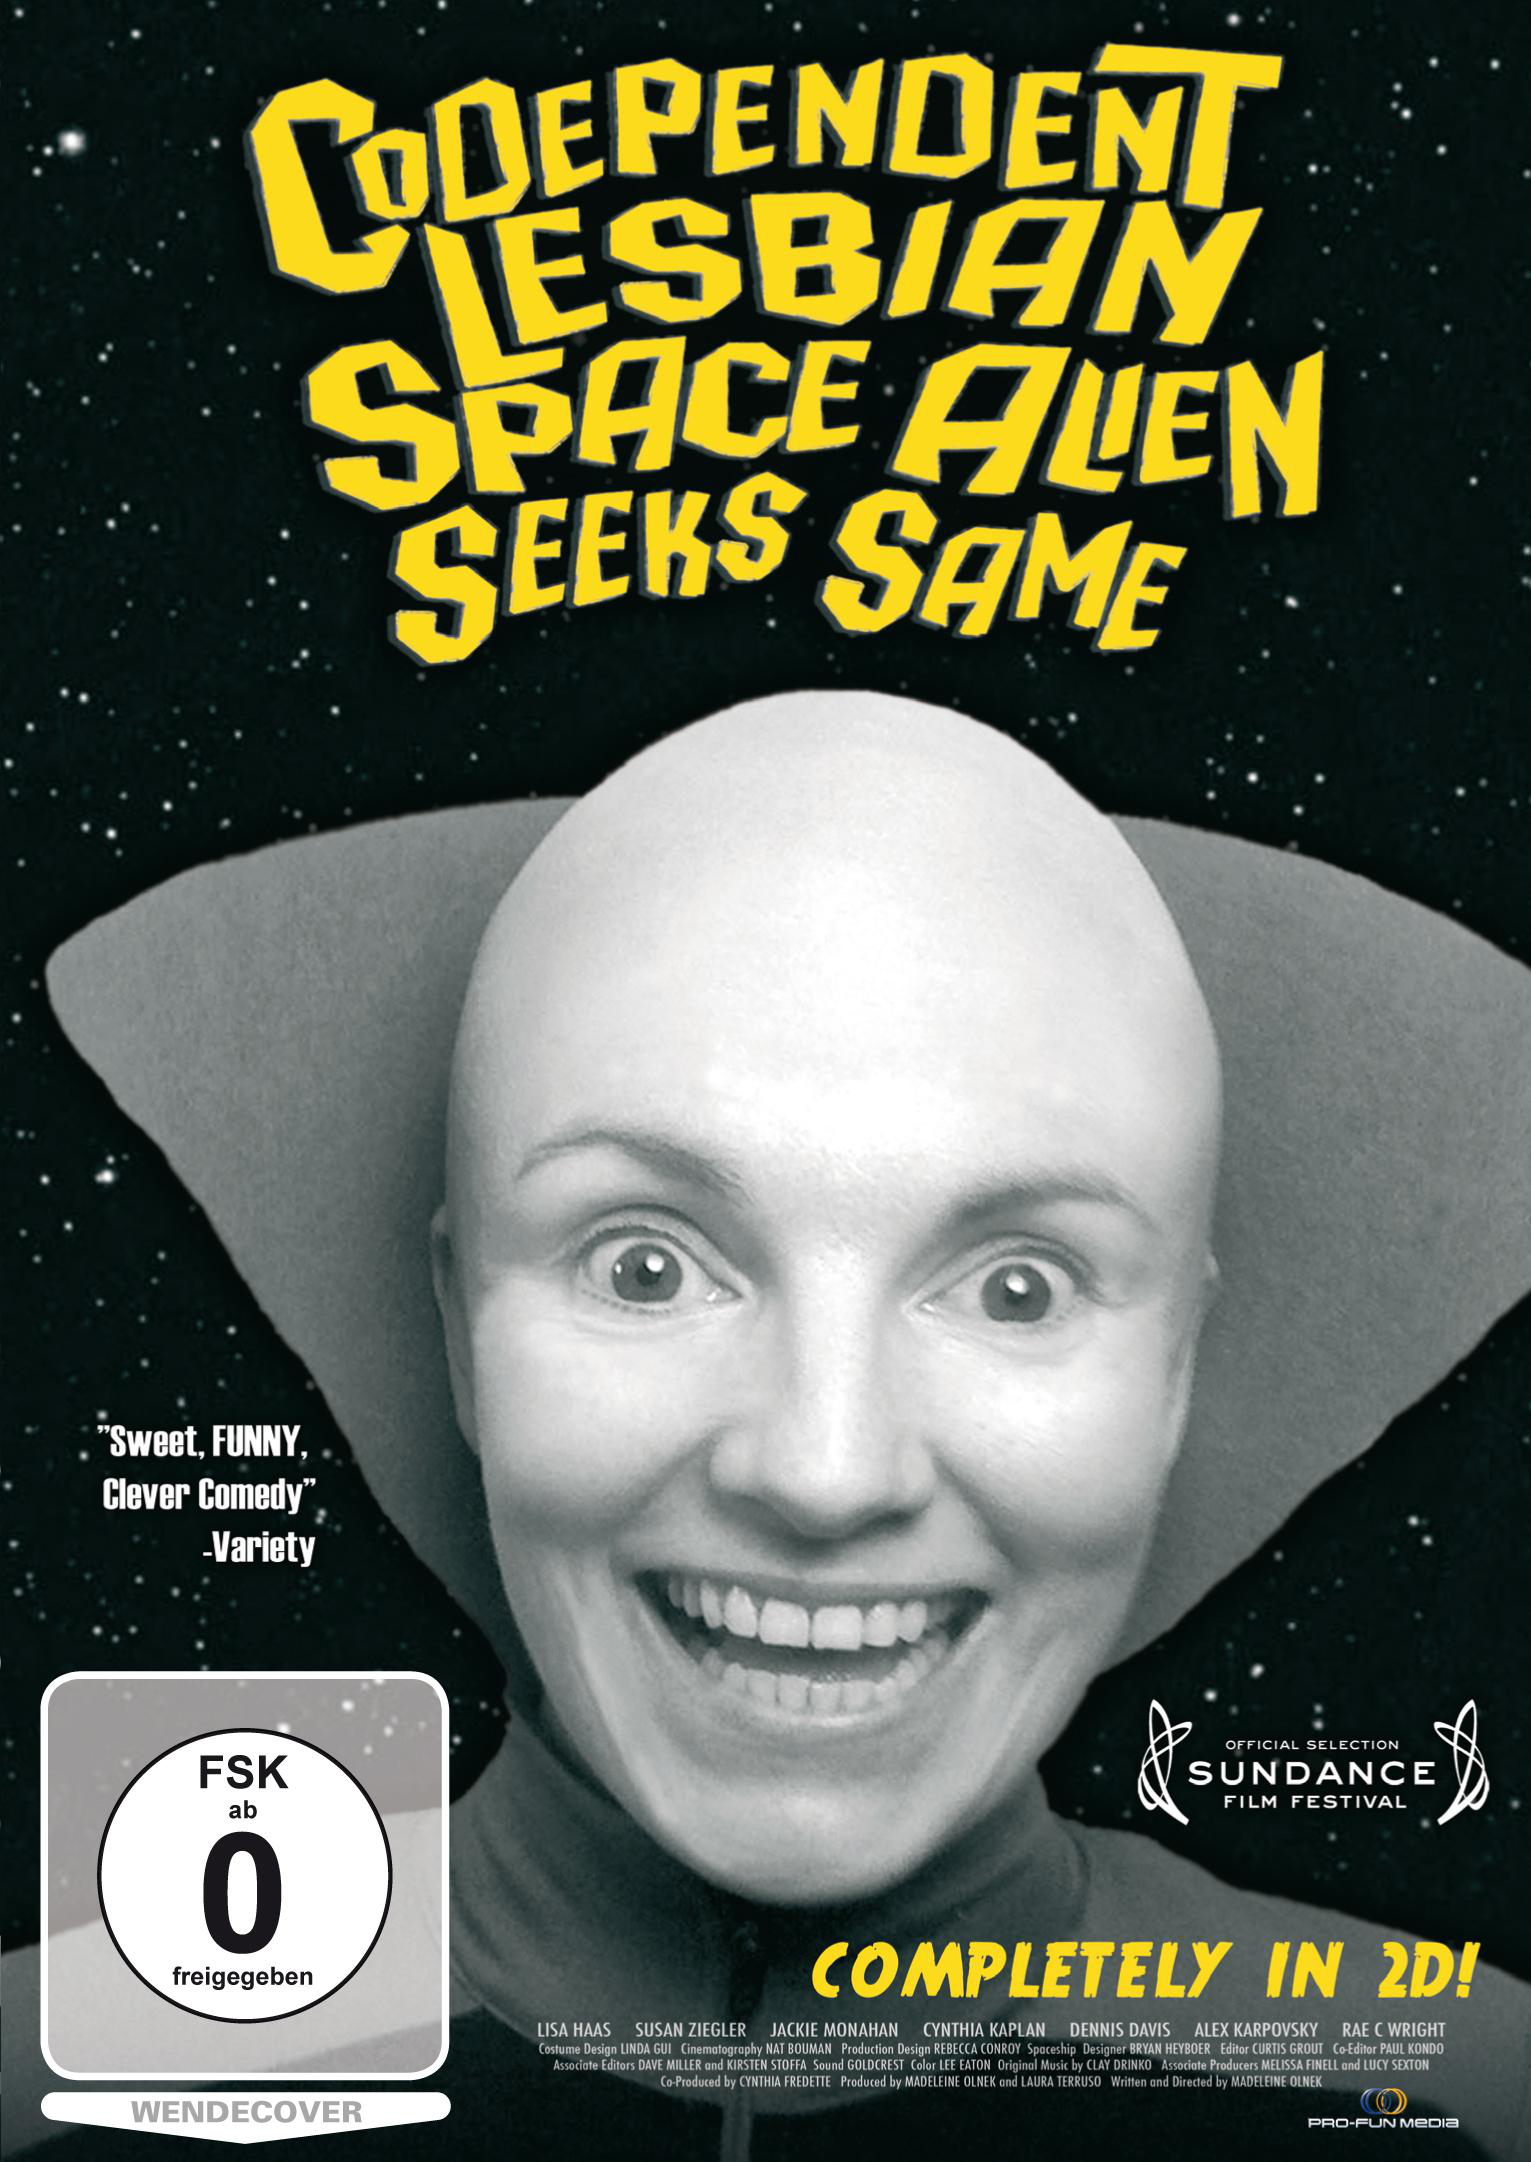 Space DVD Lesbian Alien Seeks Same Codependent